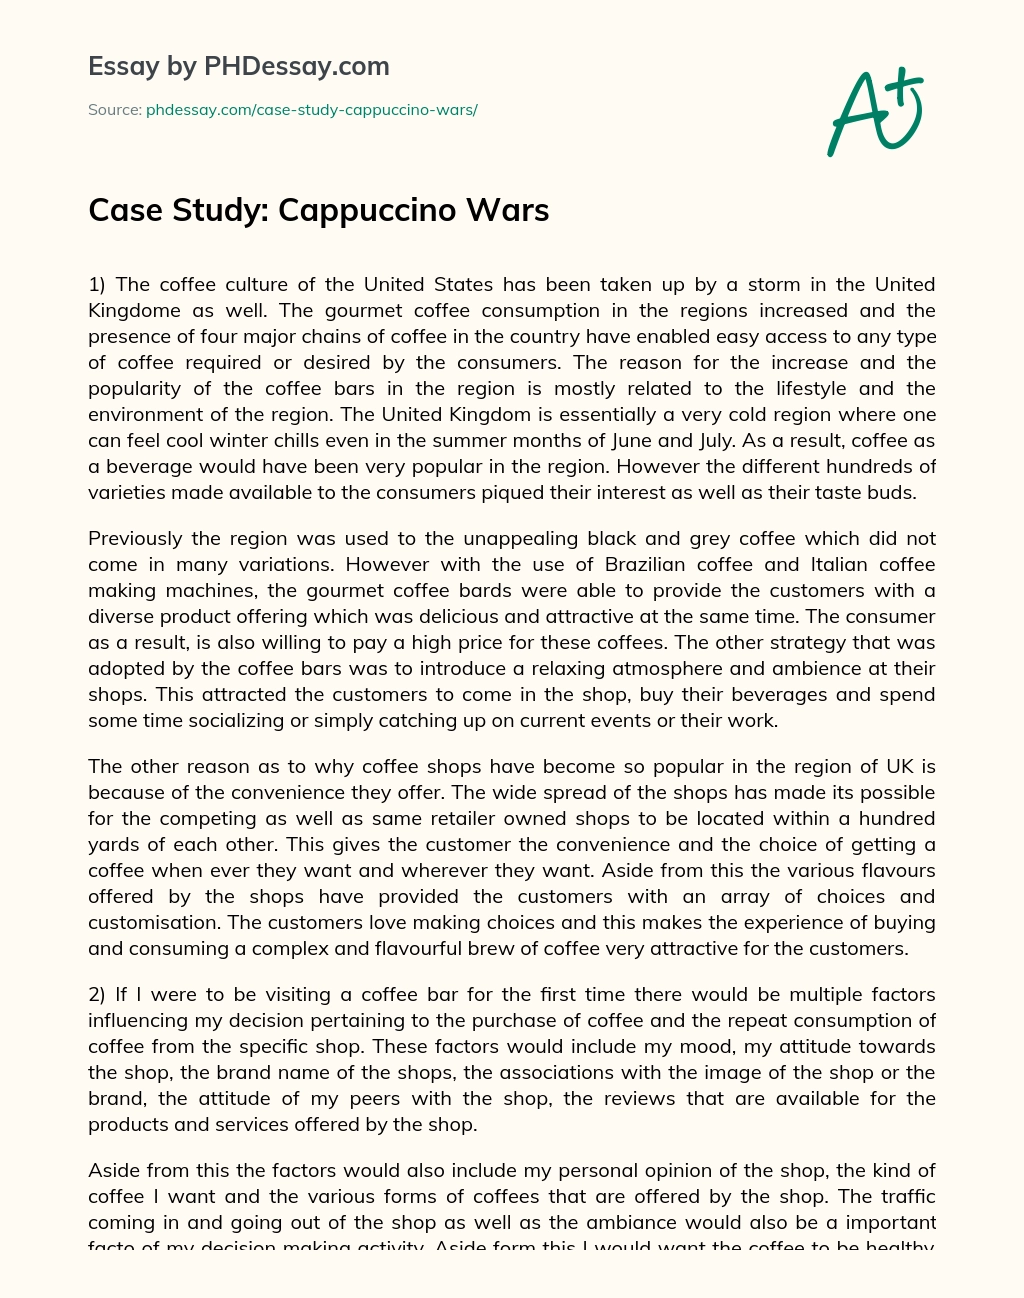 Case Study: Cappuccino Wars essay